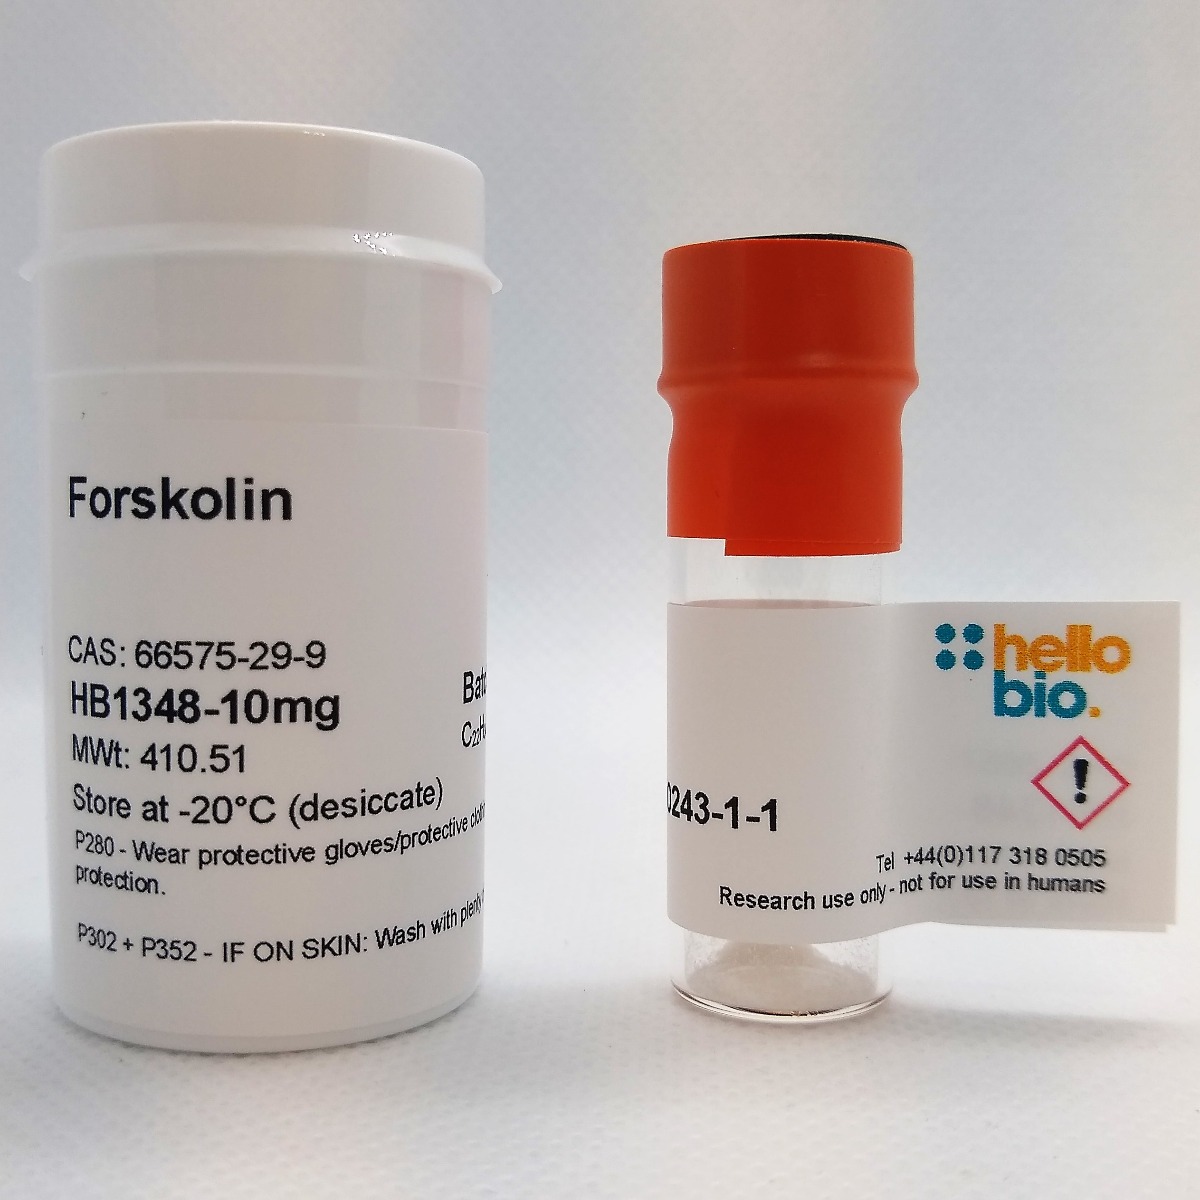 Forskolin product vial image | Hello Bio